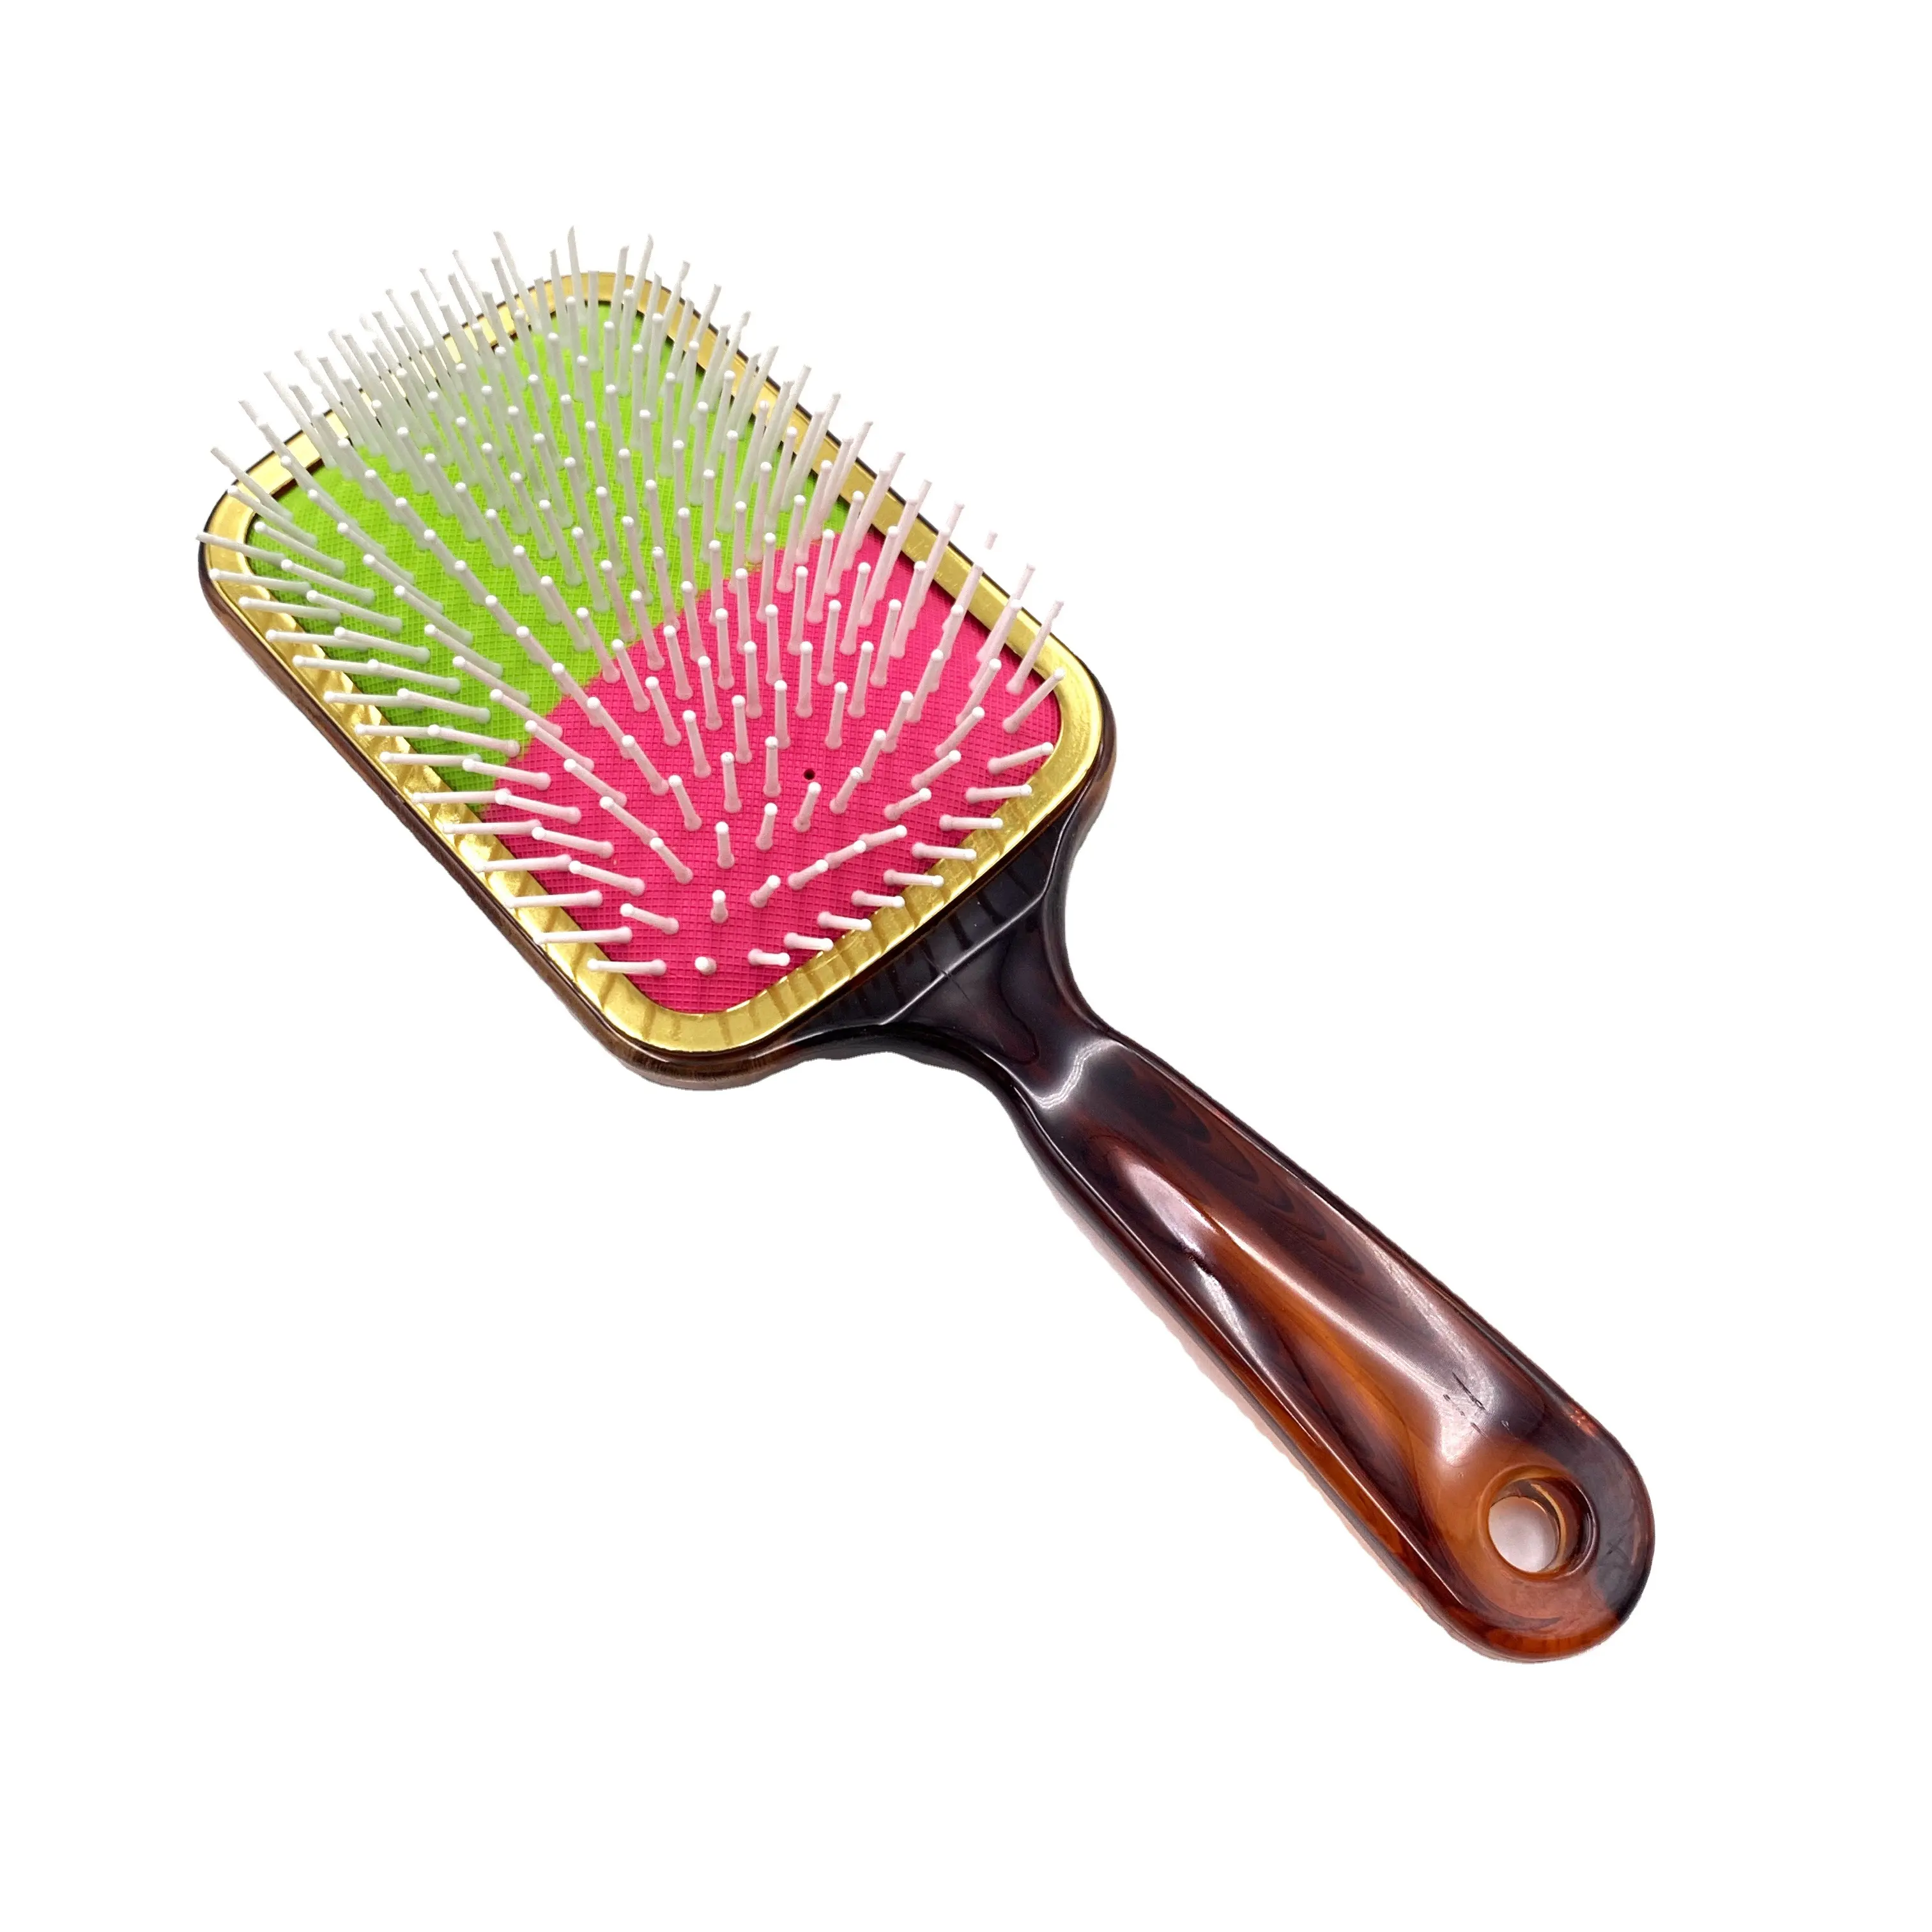 Hair brush from making machine for dyed hair brush